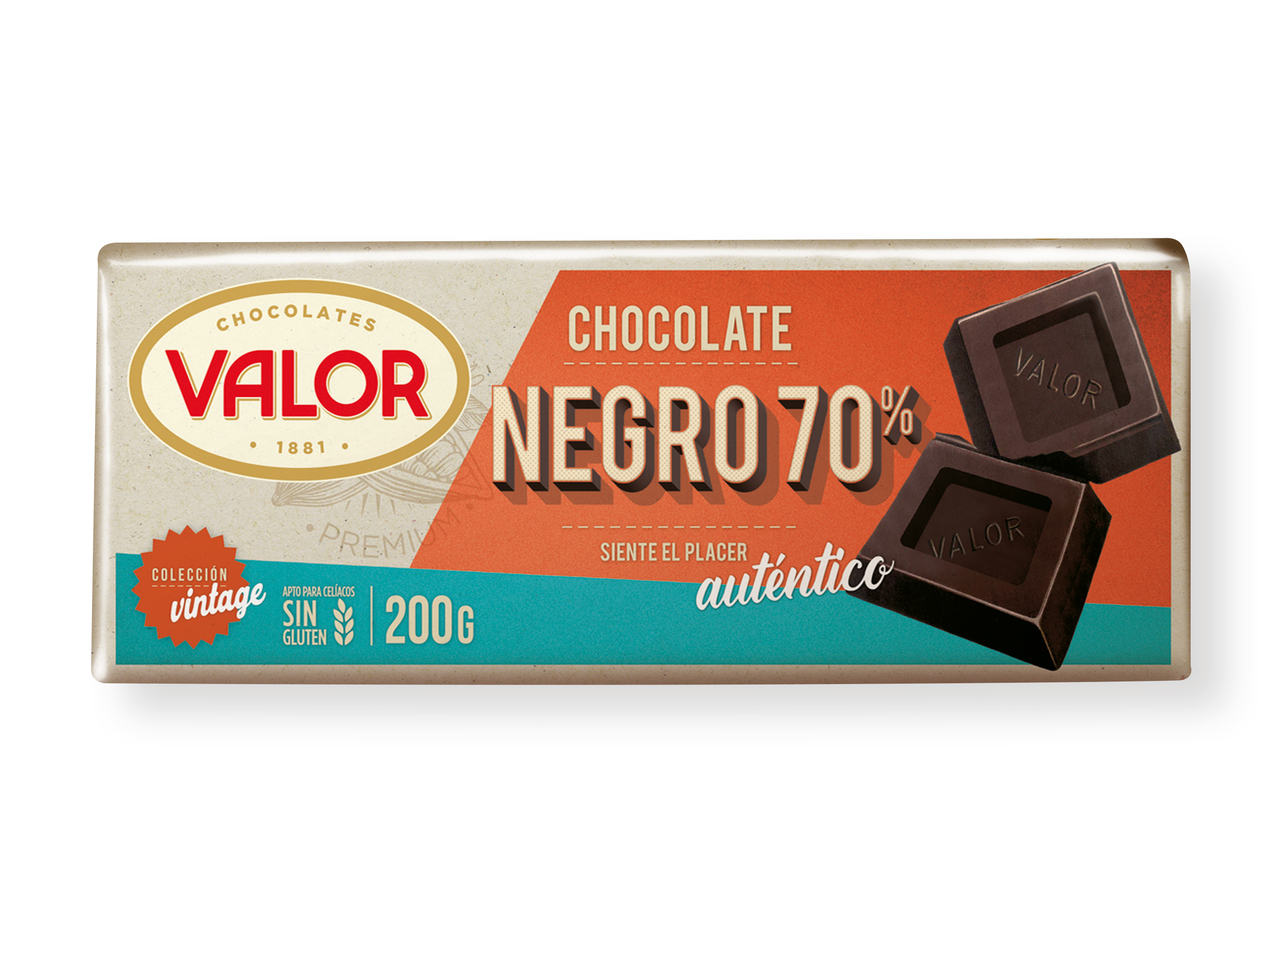 "Valor" Chocolate